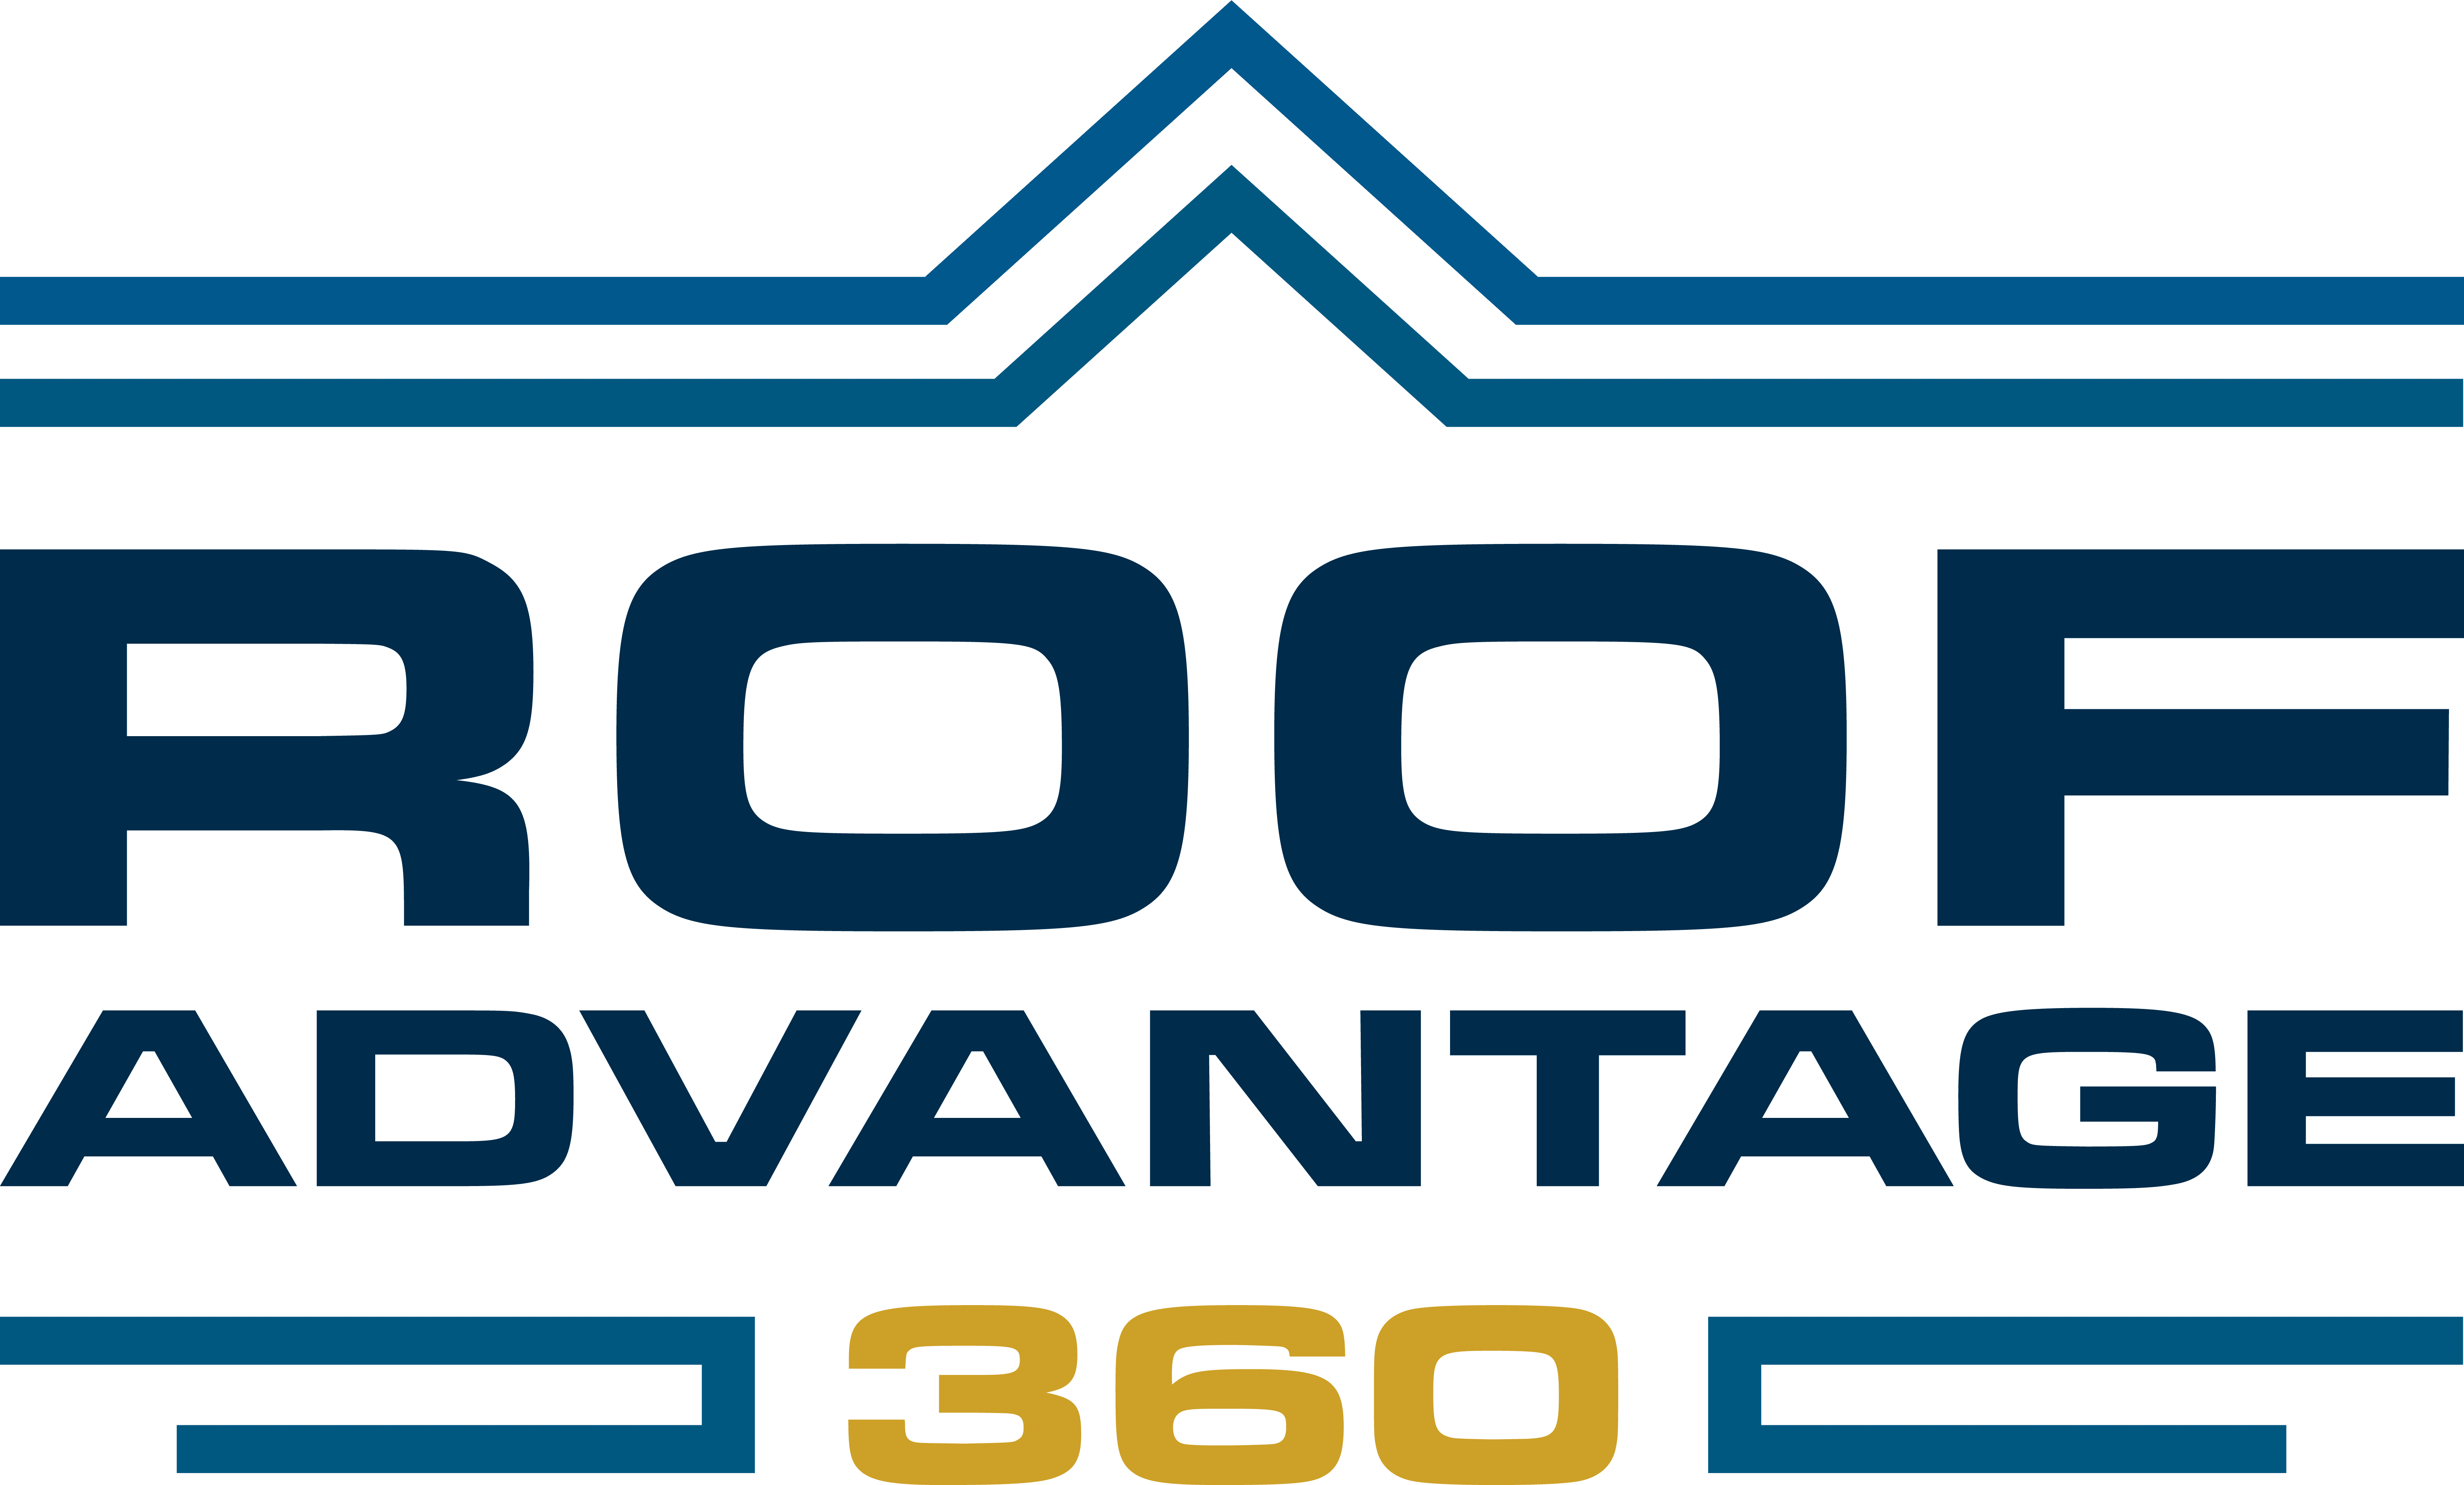 RoofAdvantage 360